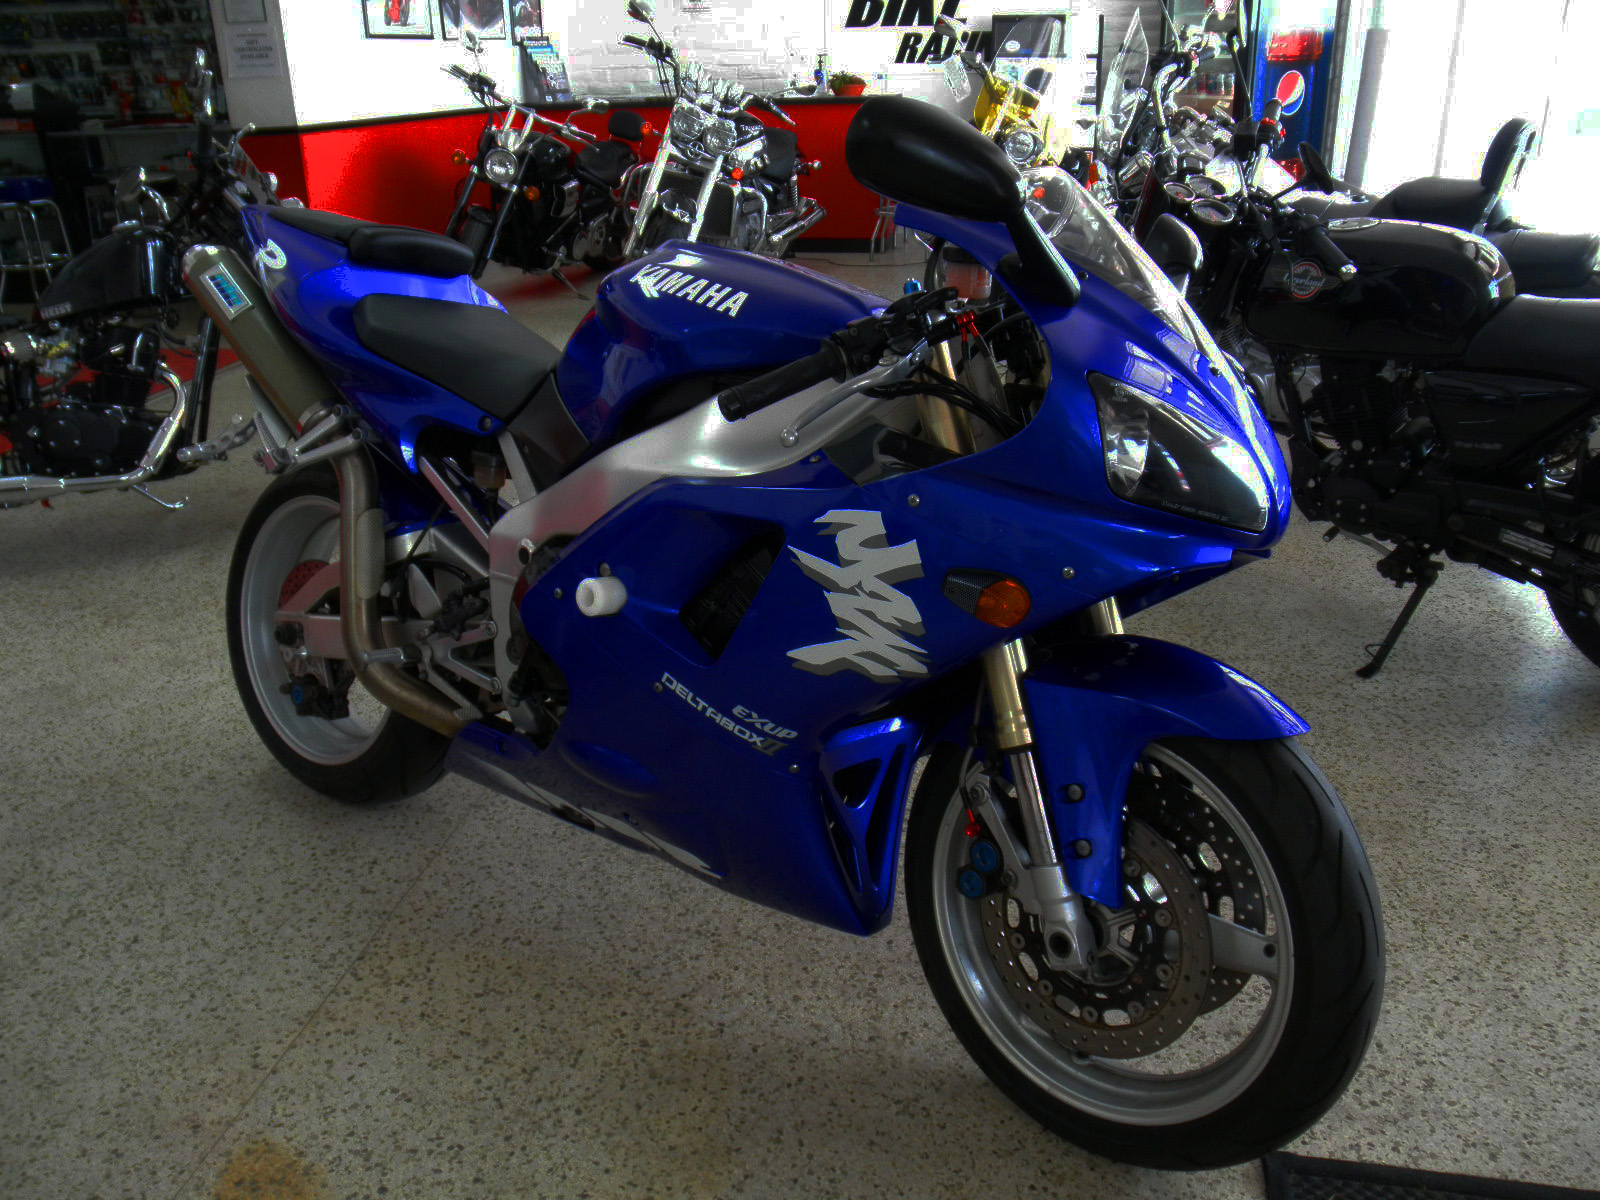 Yamaha YZF-R1 | Motorcycle Wiki | Fandom